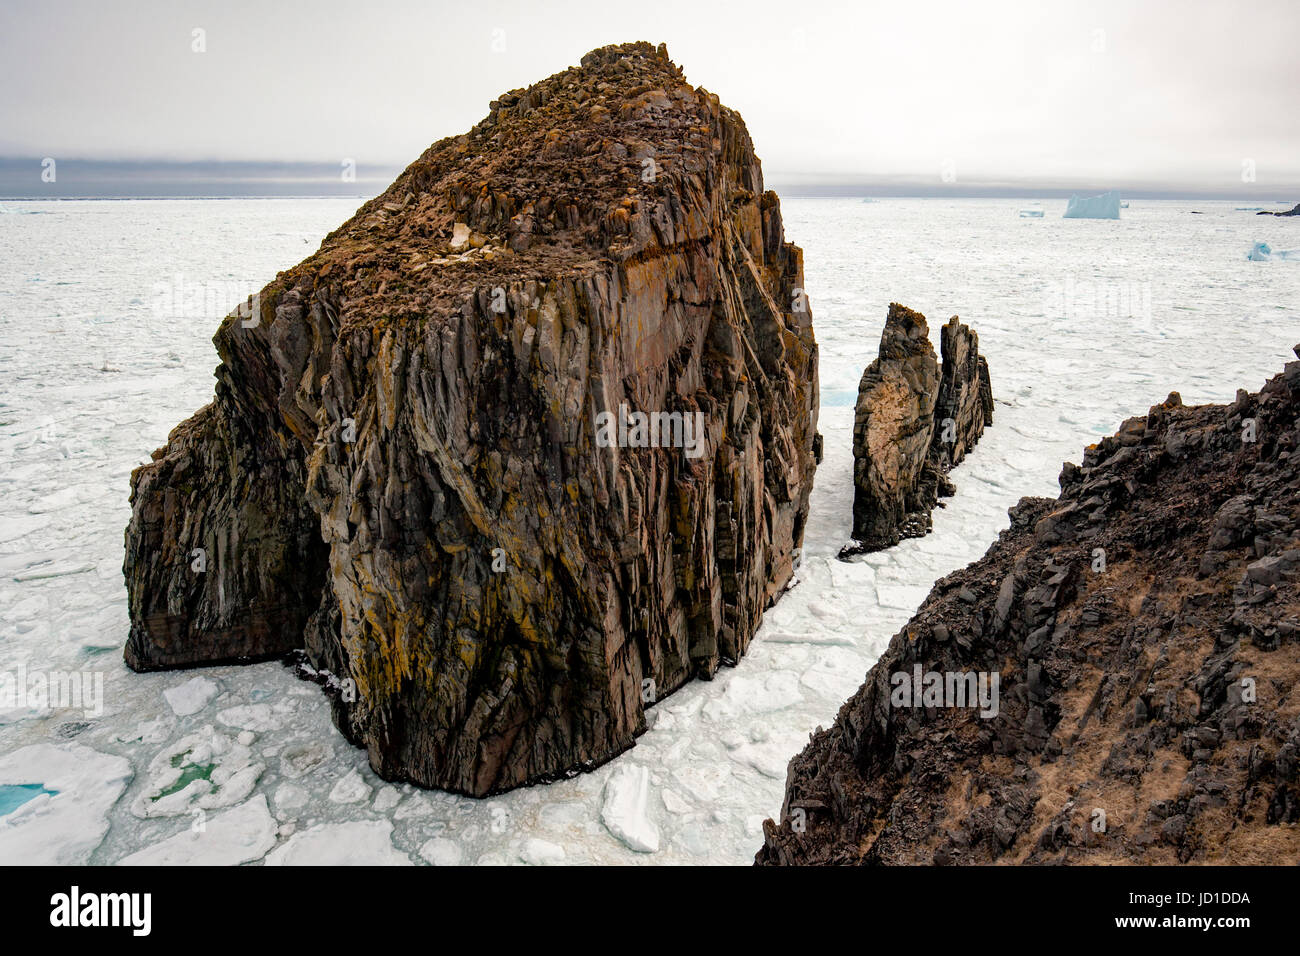 Rugged Coastline, Sea Stacks, and Sea Ice at Spillars Cove, near Bonavista, Cape Bonavista Peninsula, Newfoundland, Canada Stock Photo